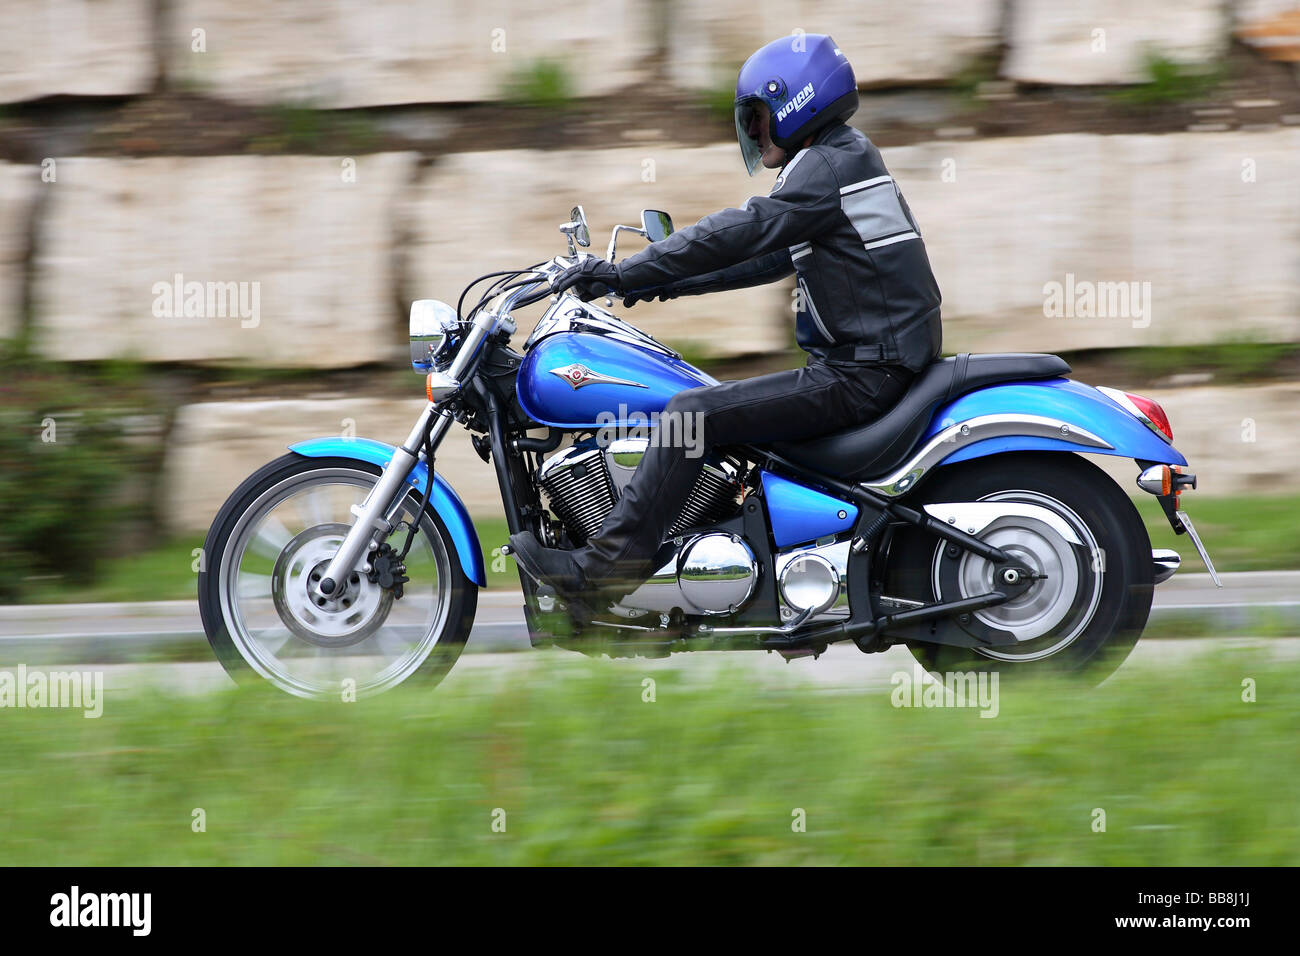 Kawasaki VN 900 motorcycle, riding shot Stock Photo - Alamy